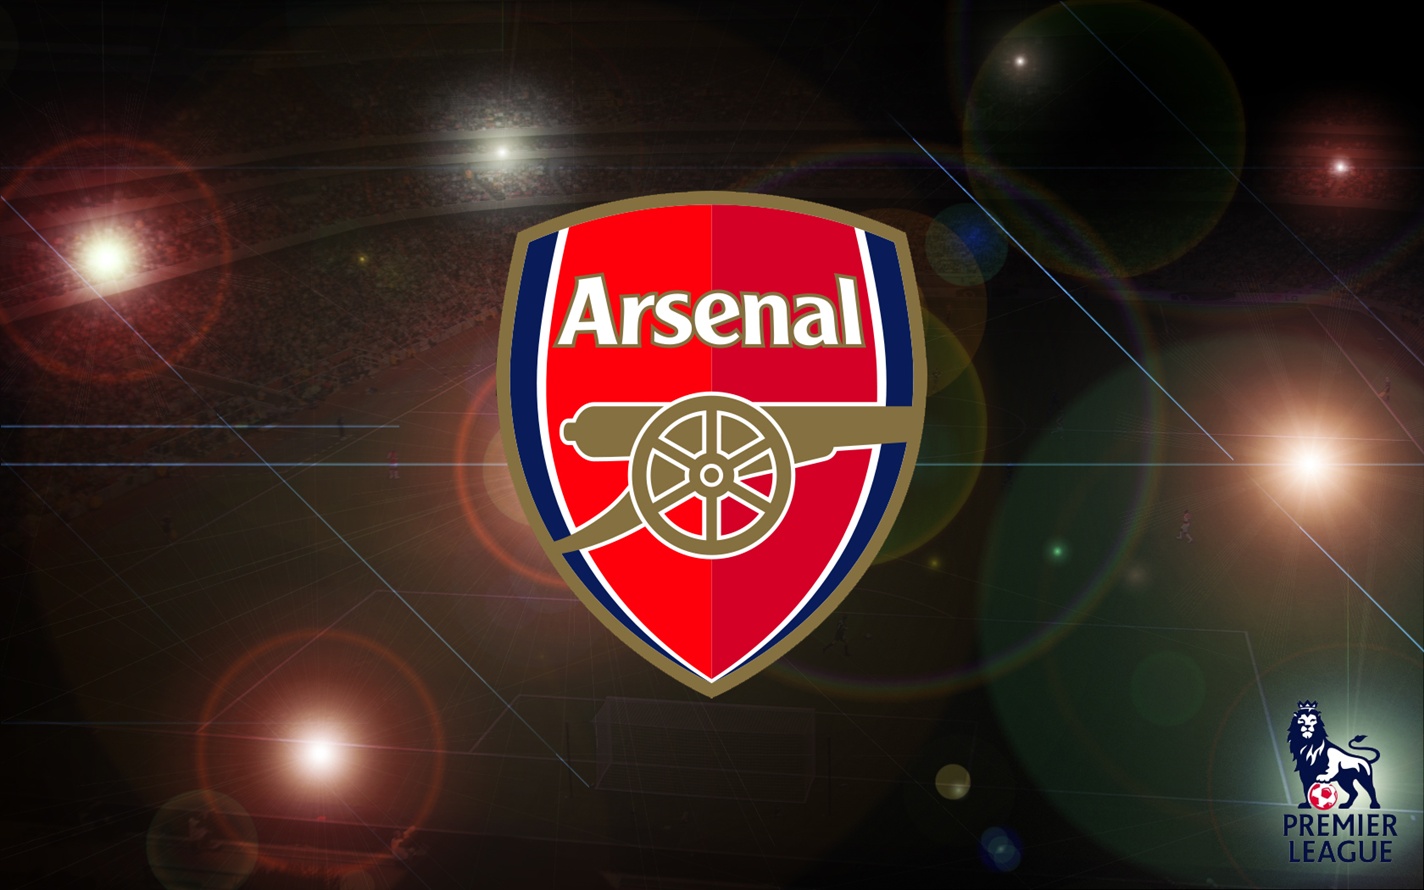 http://3.bp.blogspot.com/-K_XQ0DlyWf4/Tl0zLK6T5NI/AAAAAAAA3I8/3TO72wMemc4/s1600/Arsenal-Football-Club-Logo.jpg